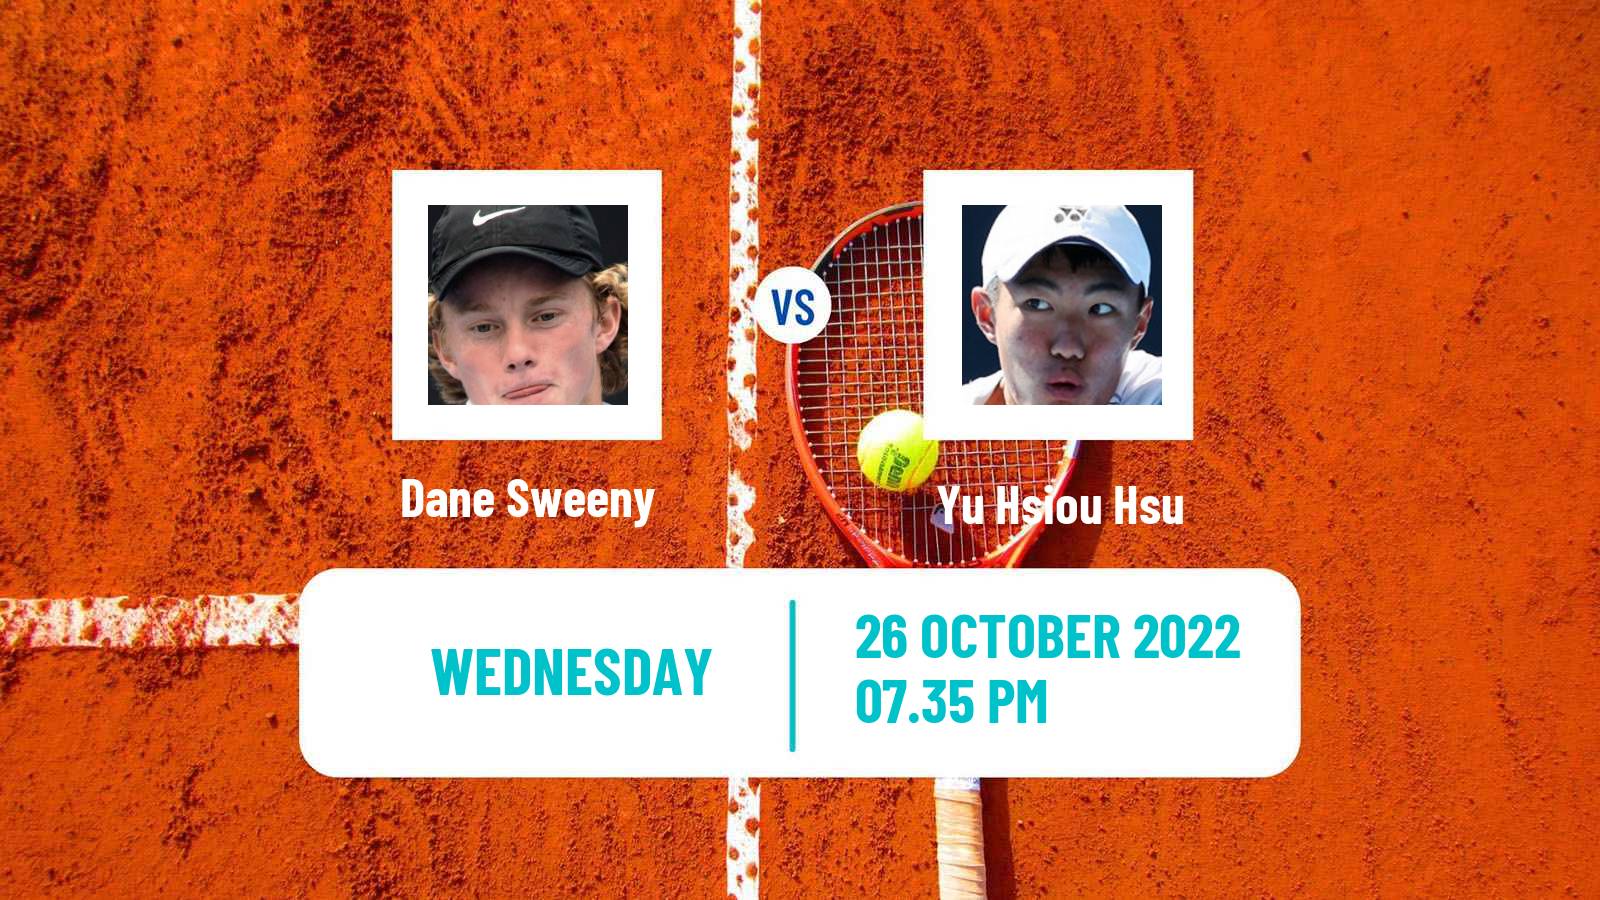 Tennis ATP Challenger Dane Sweeny - Yu Hsiou Hsu